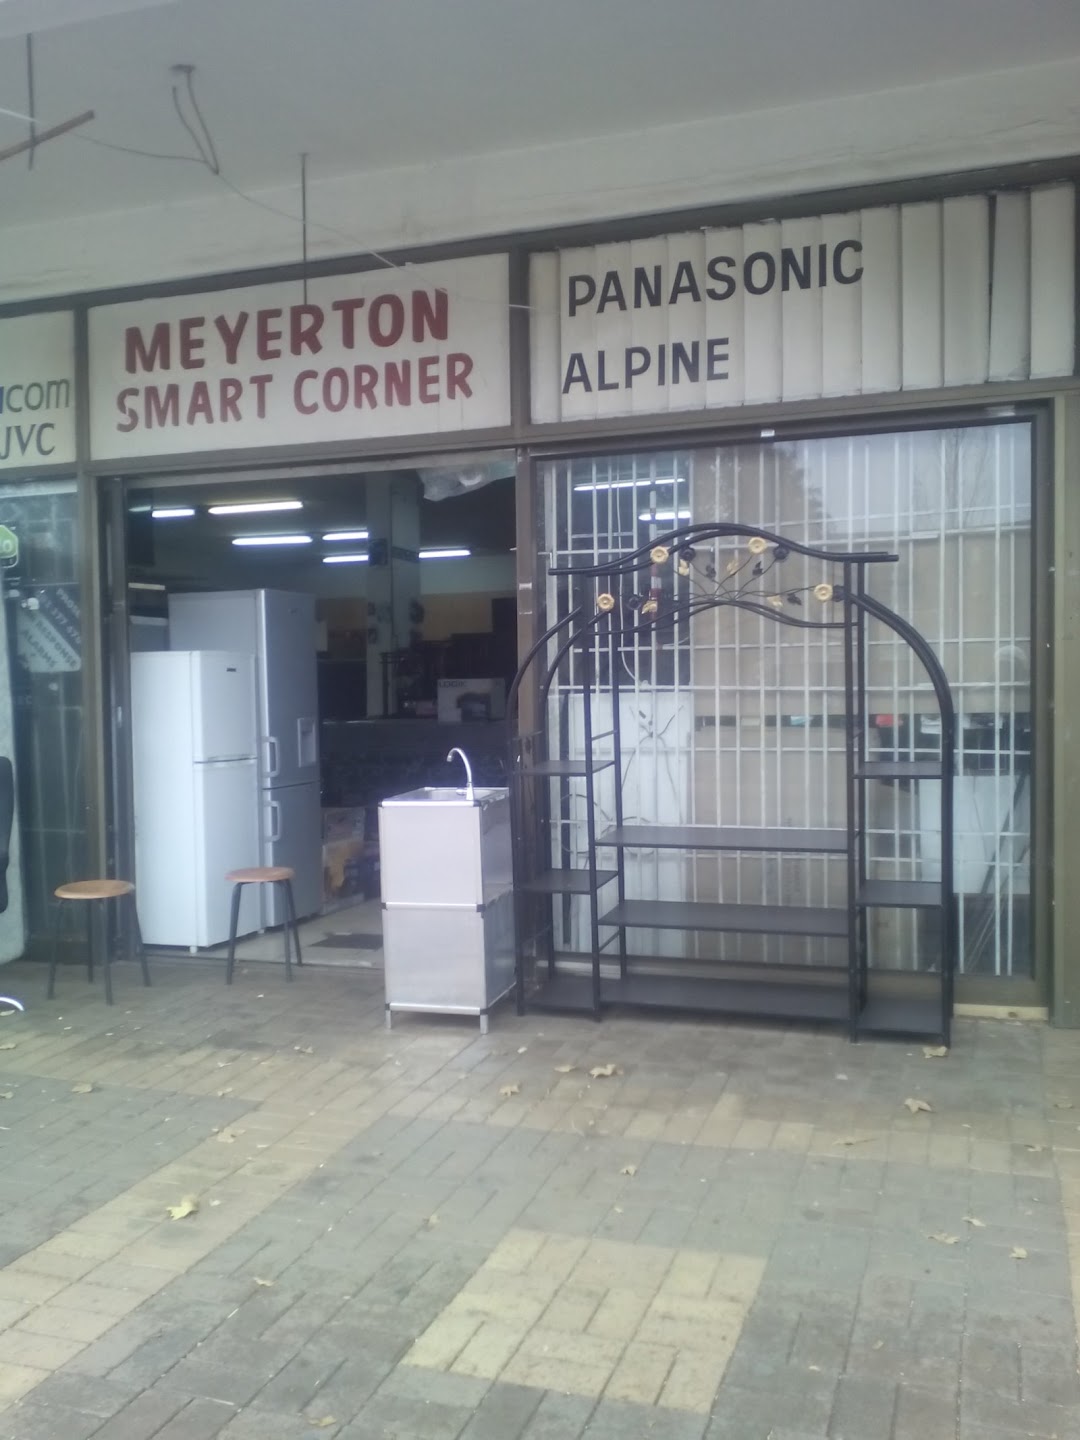 Meyerton Smart Corner